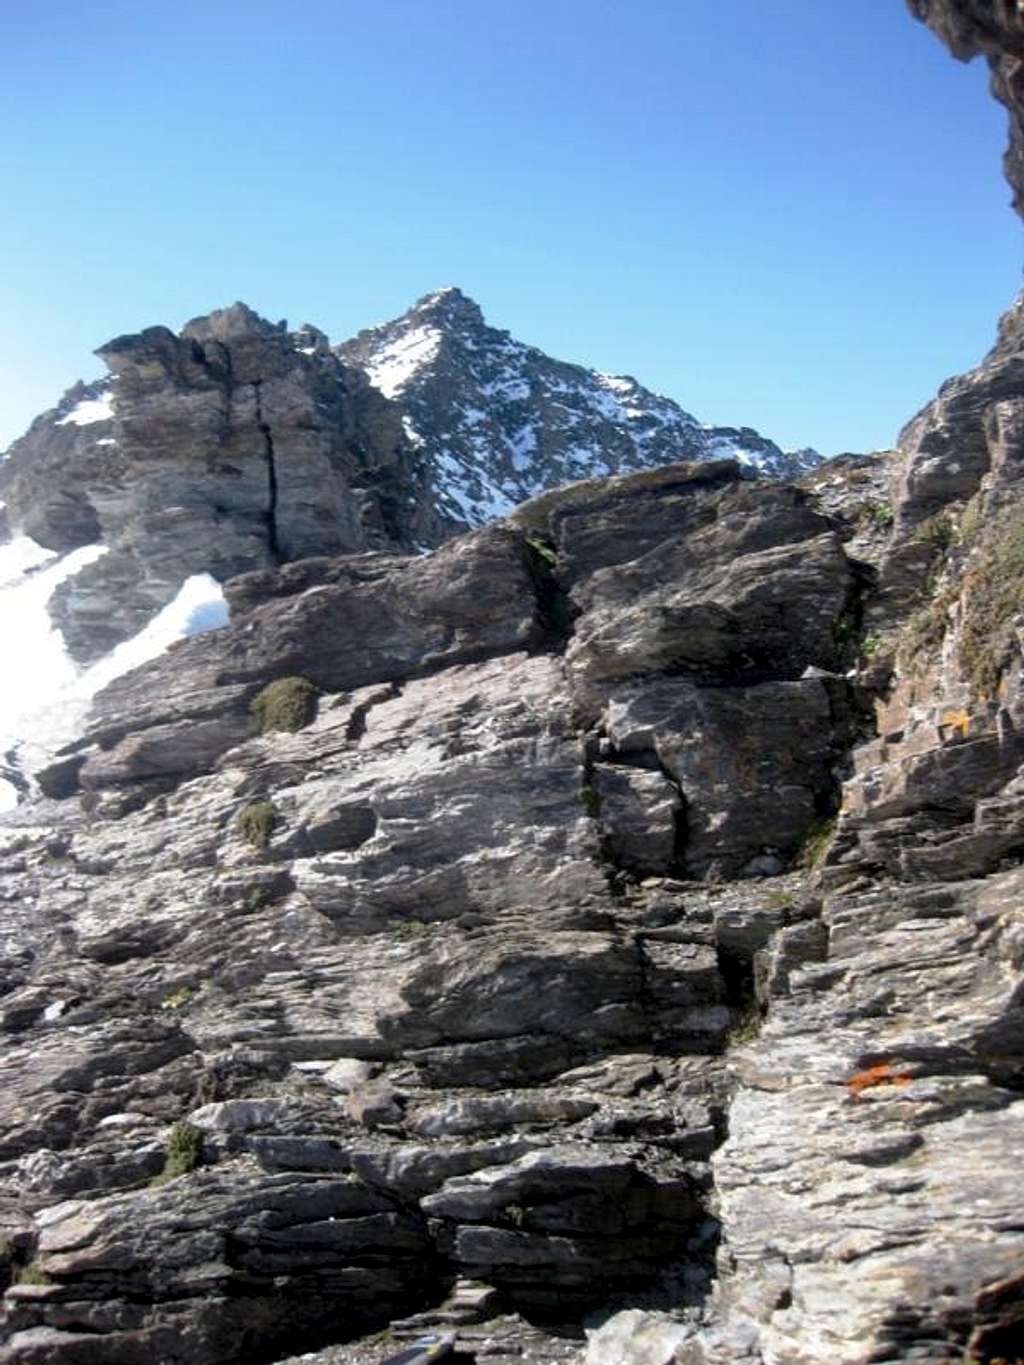 On the North ridge of the Madritschspitze / Cima Madriccio